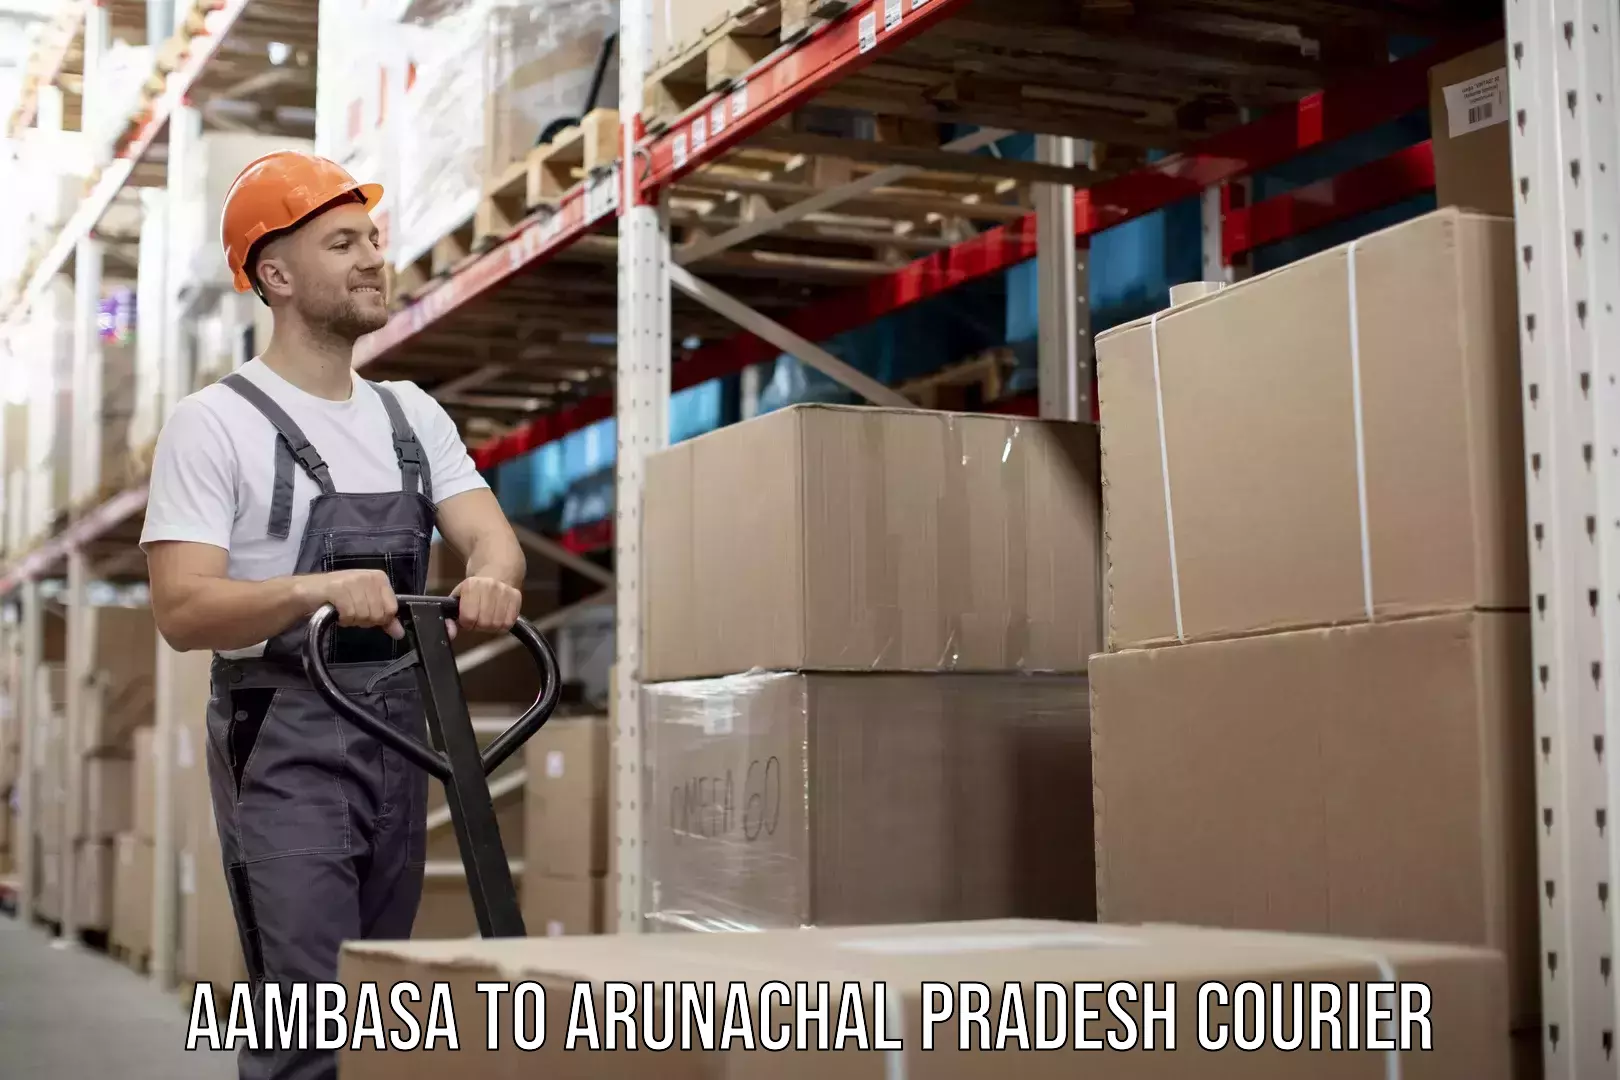 Rural area delivery Aambasa to Arunachal Pradesh